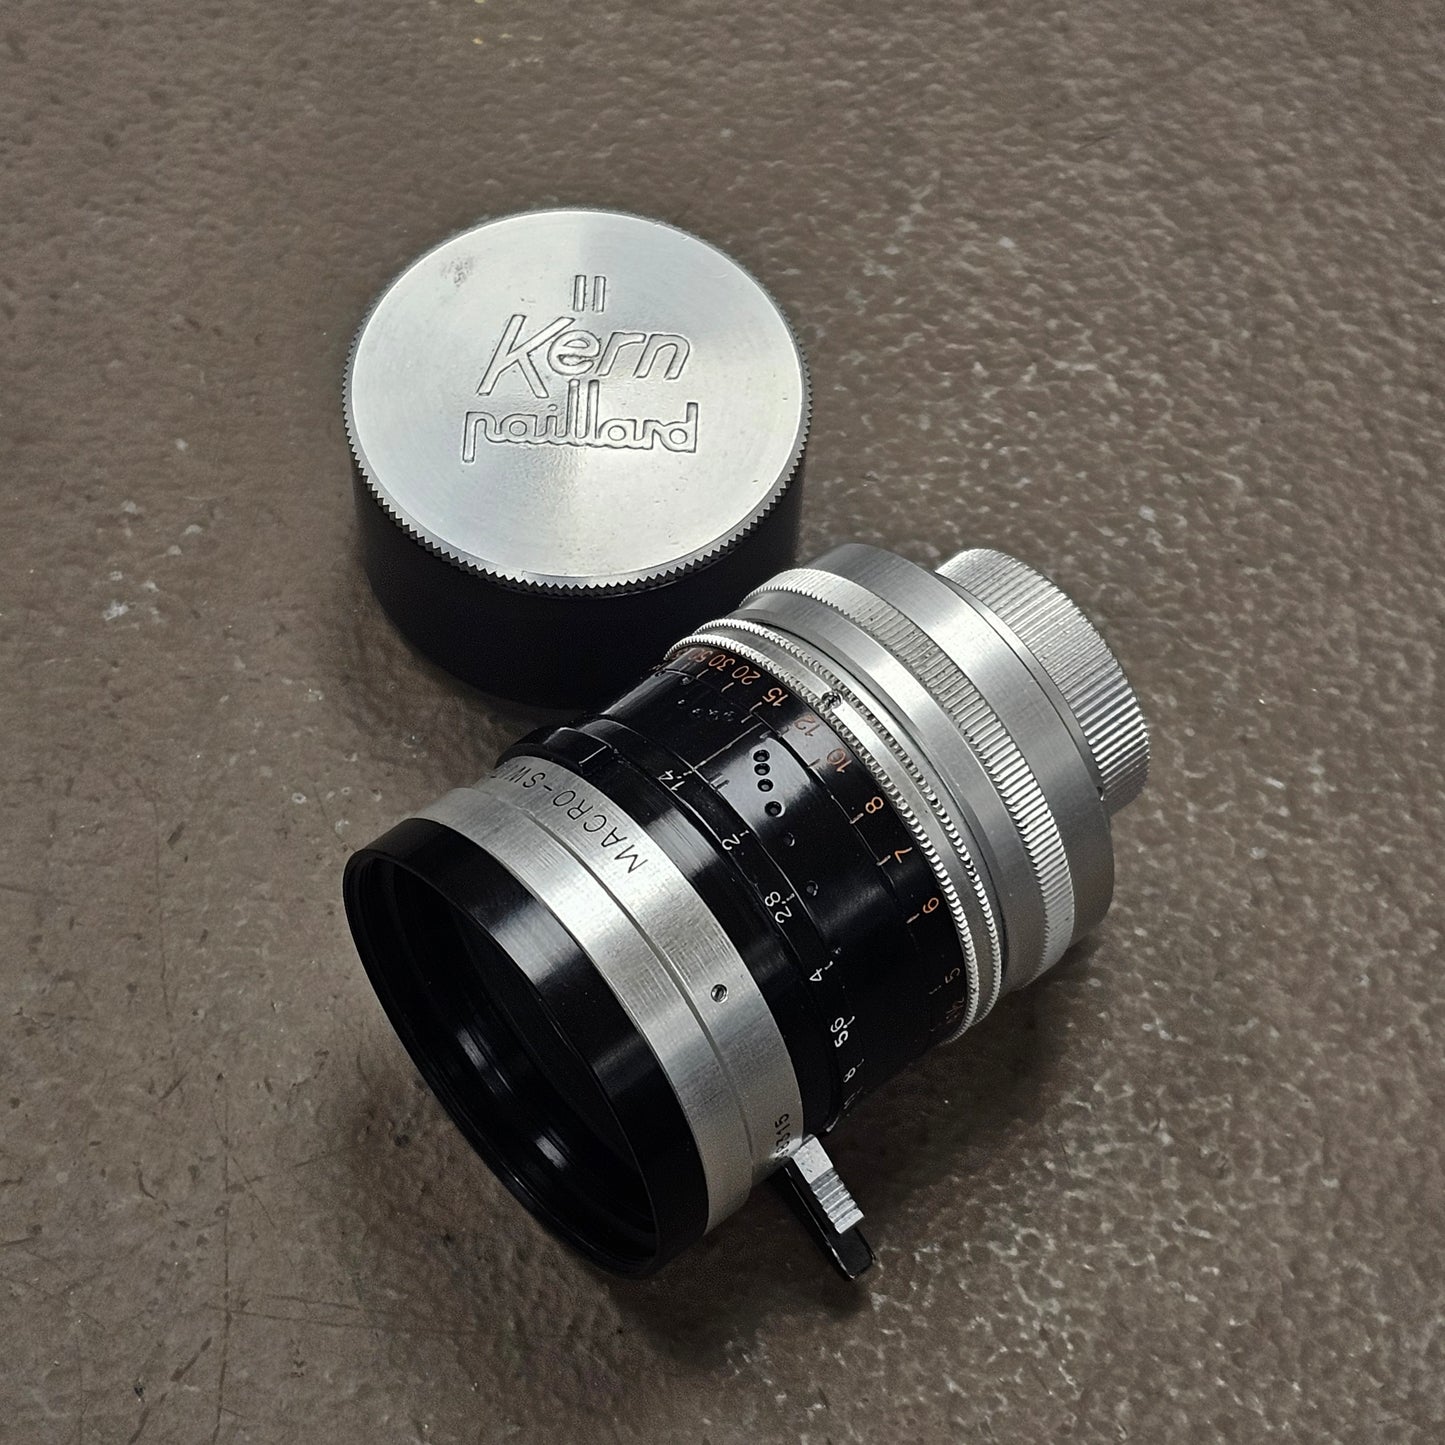 Switar 50mm f1.4 H16RX Macro Preset C-Mount lens S# 998315